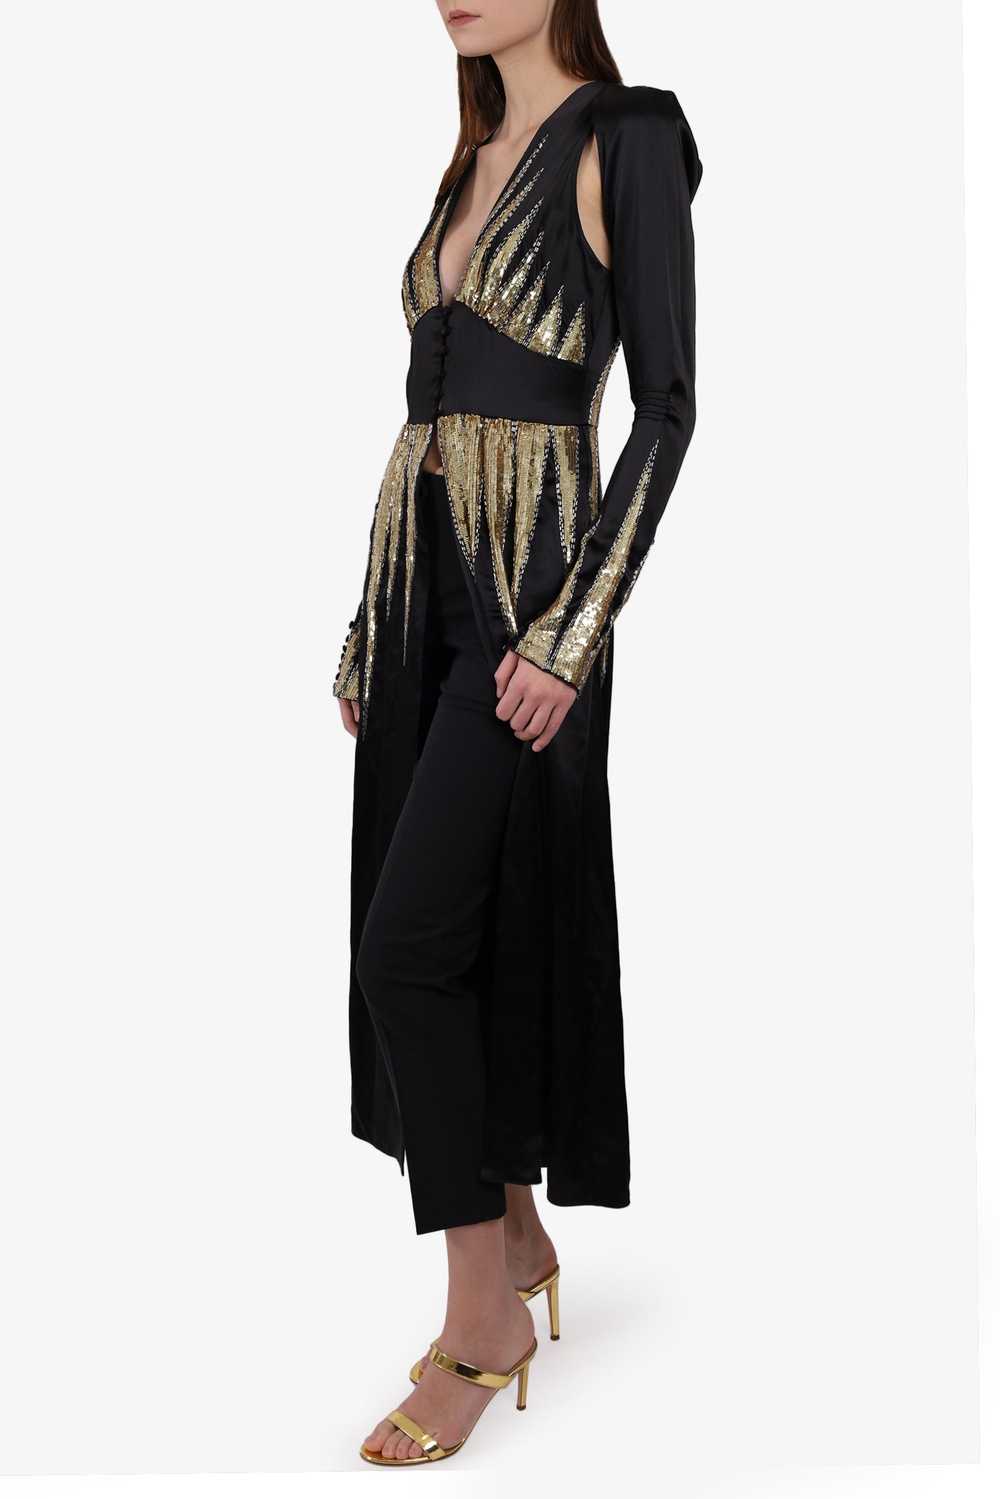 Attico Black Long-sleeve V-Neck Dress with Gold S… - image 2